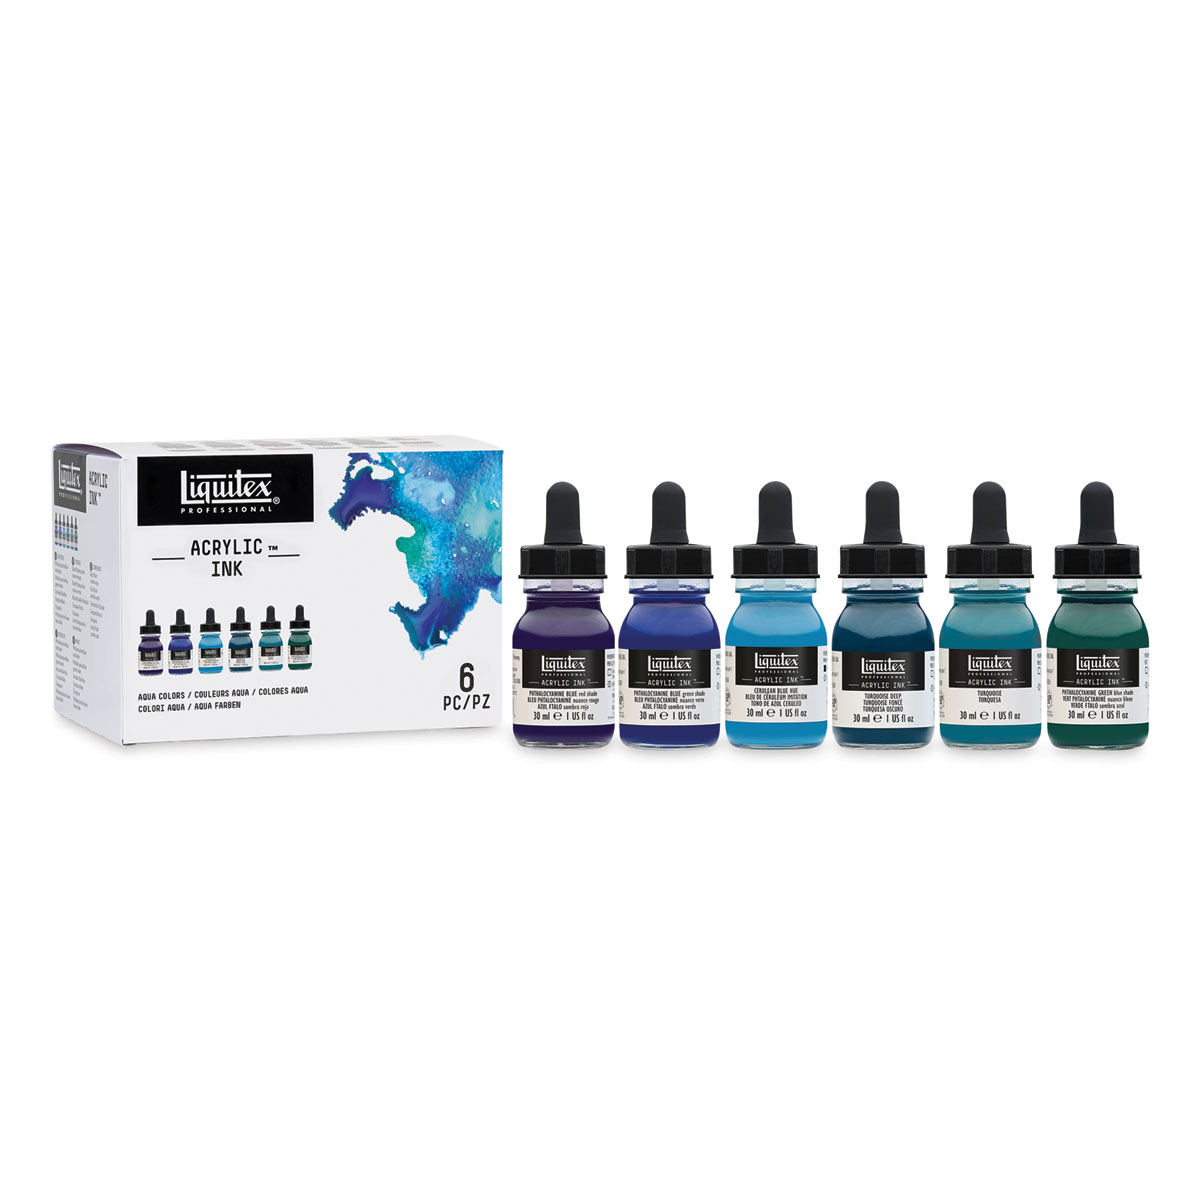 Liquitex Professional Acrylic Ink Set - Metallic Colors, Set of 6